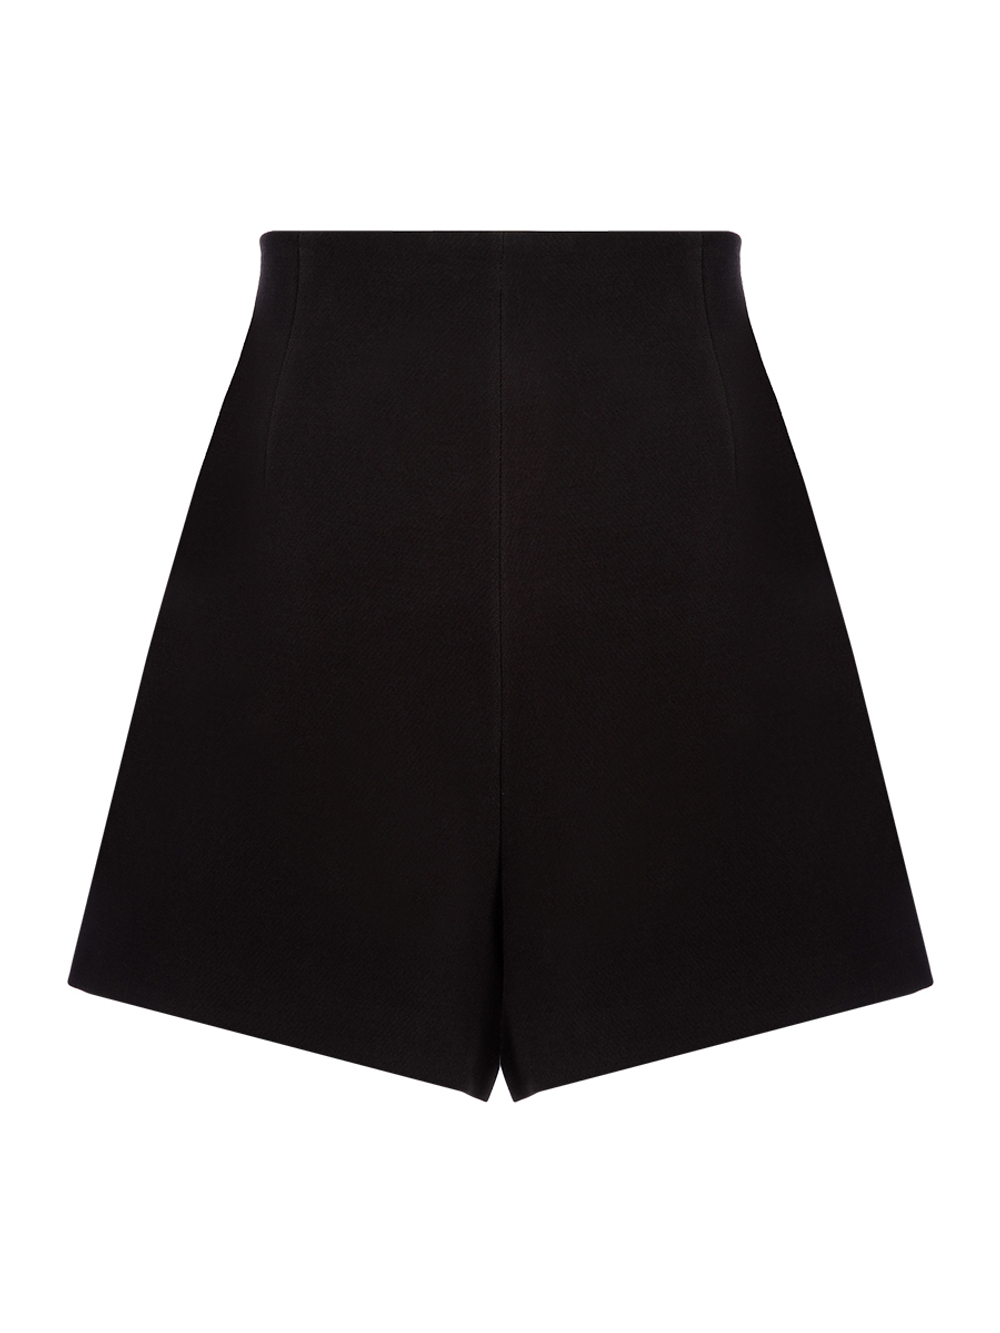 skirt-shorts